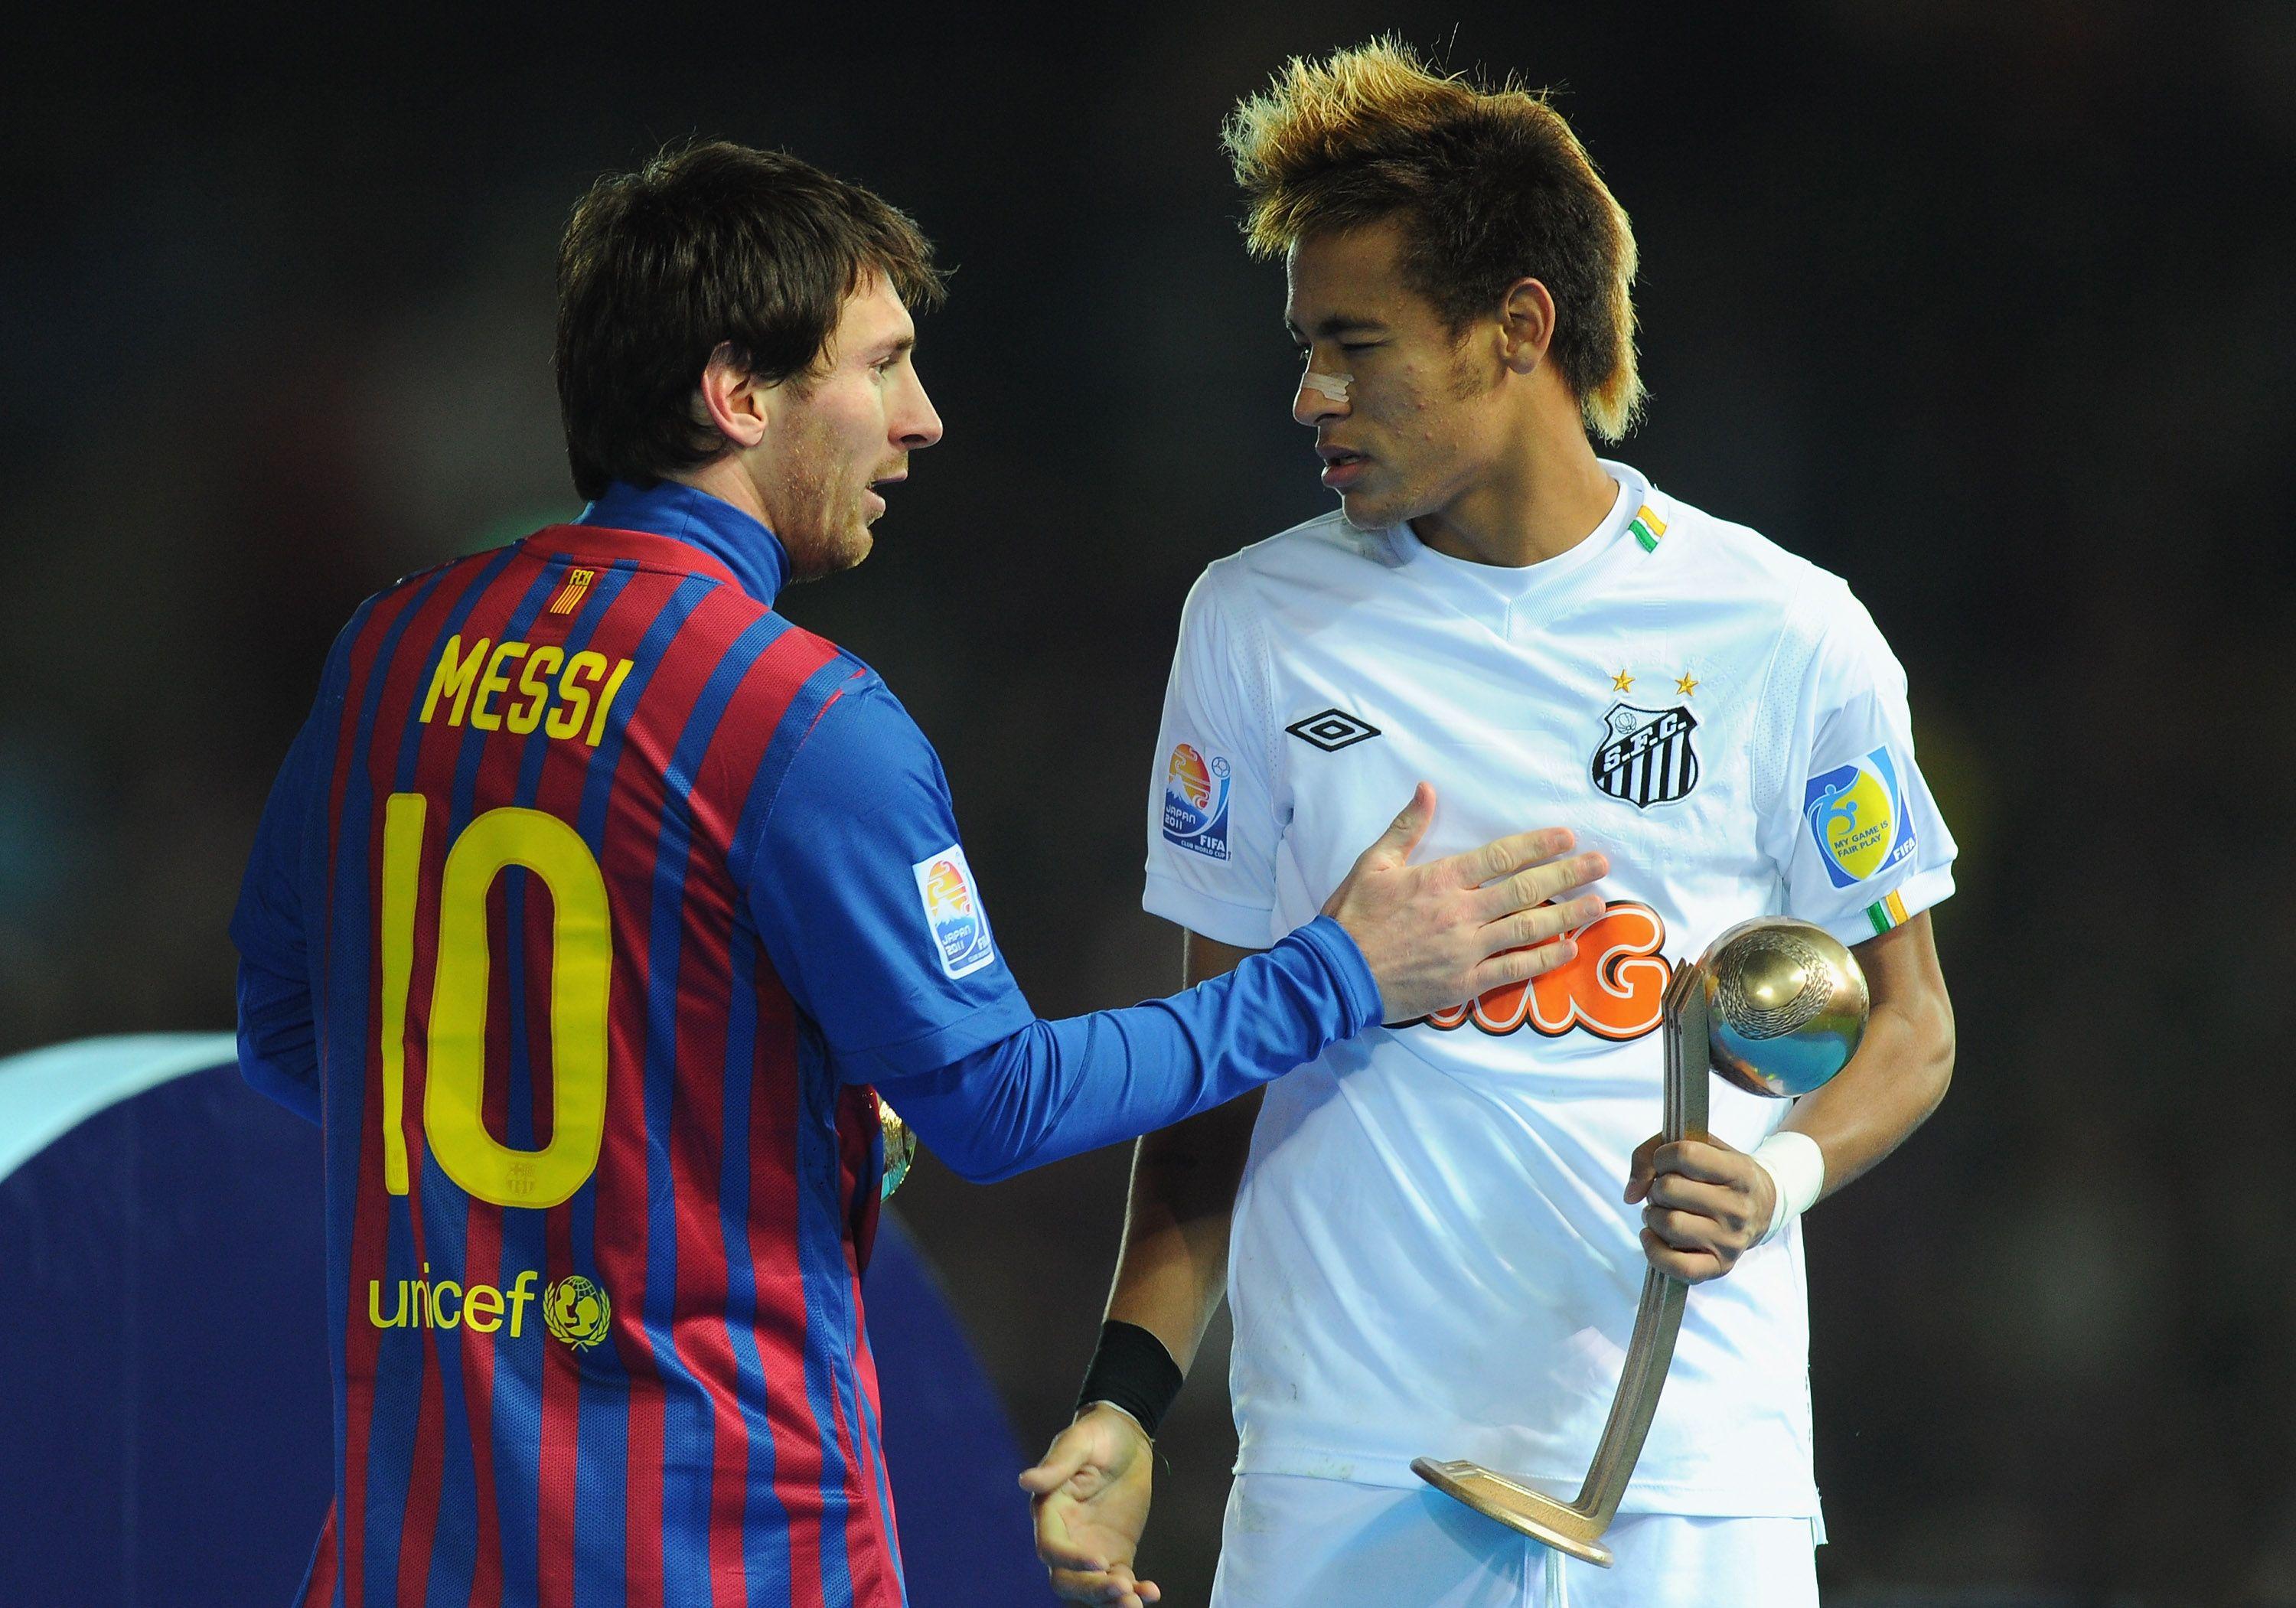 Messi vs neymar barcelona real madrid Wallpaper